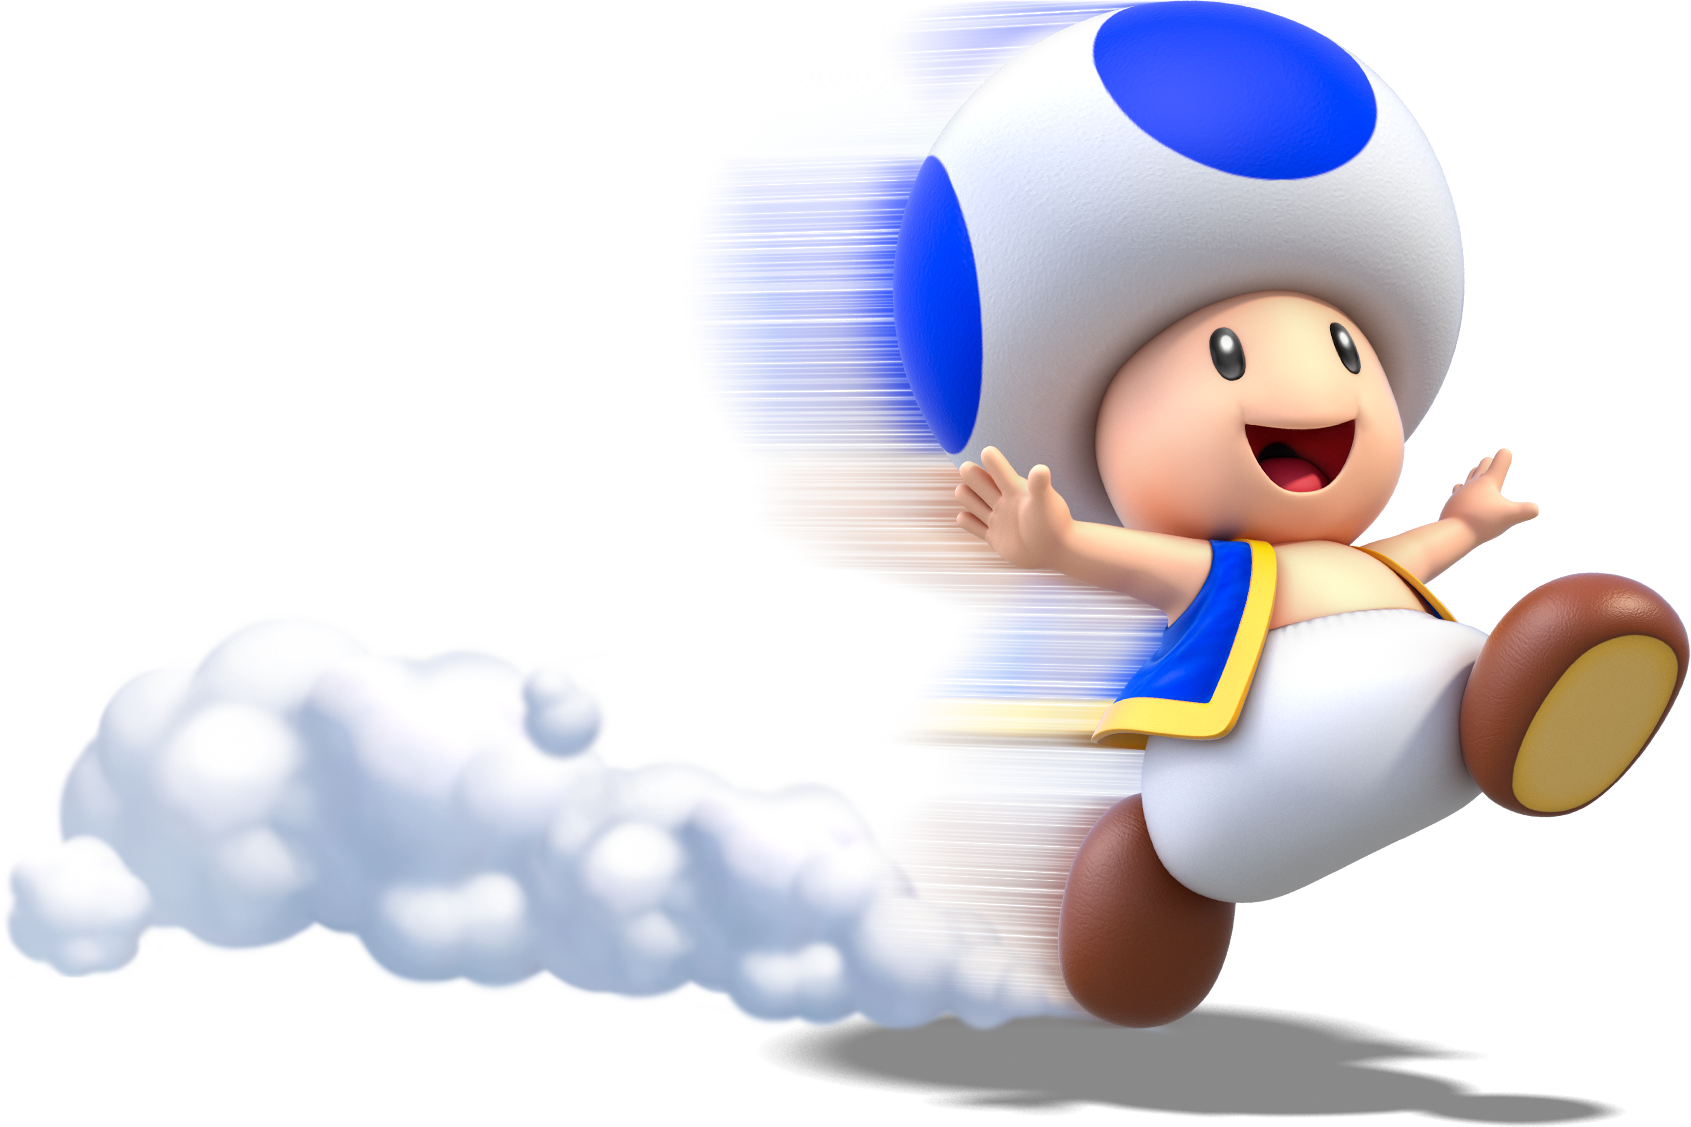 Super Mario Odyssey 2, Disney Fanon Wiki